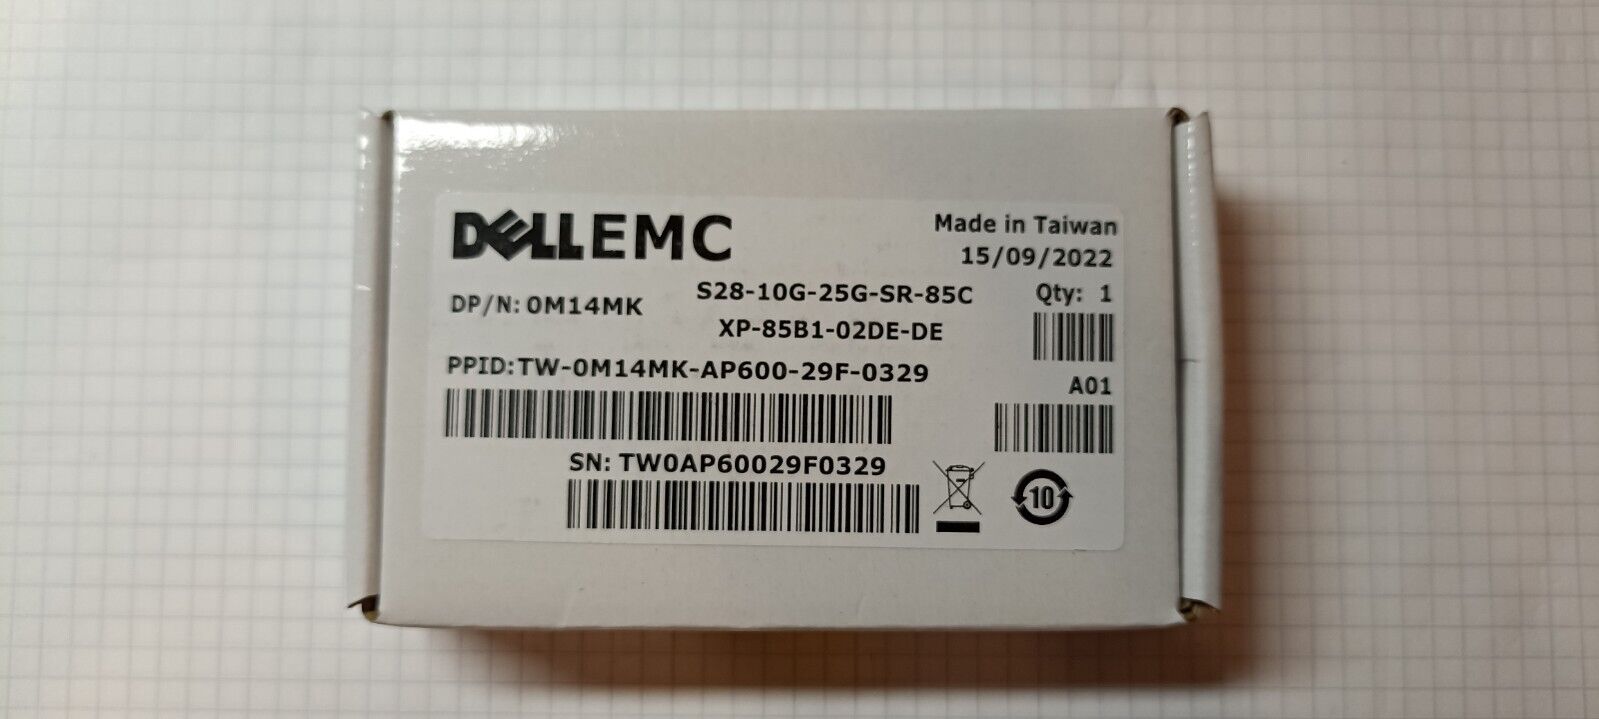 Dell S28-10G-25G-SR-85C 10/25GbE Dual Rate SFP28 SR 85C Transceiver P/N: 0M14MK